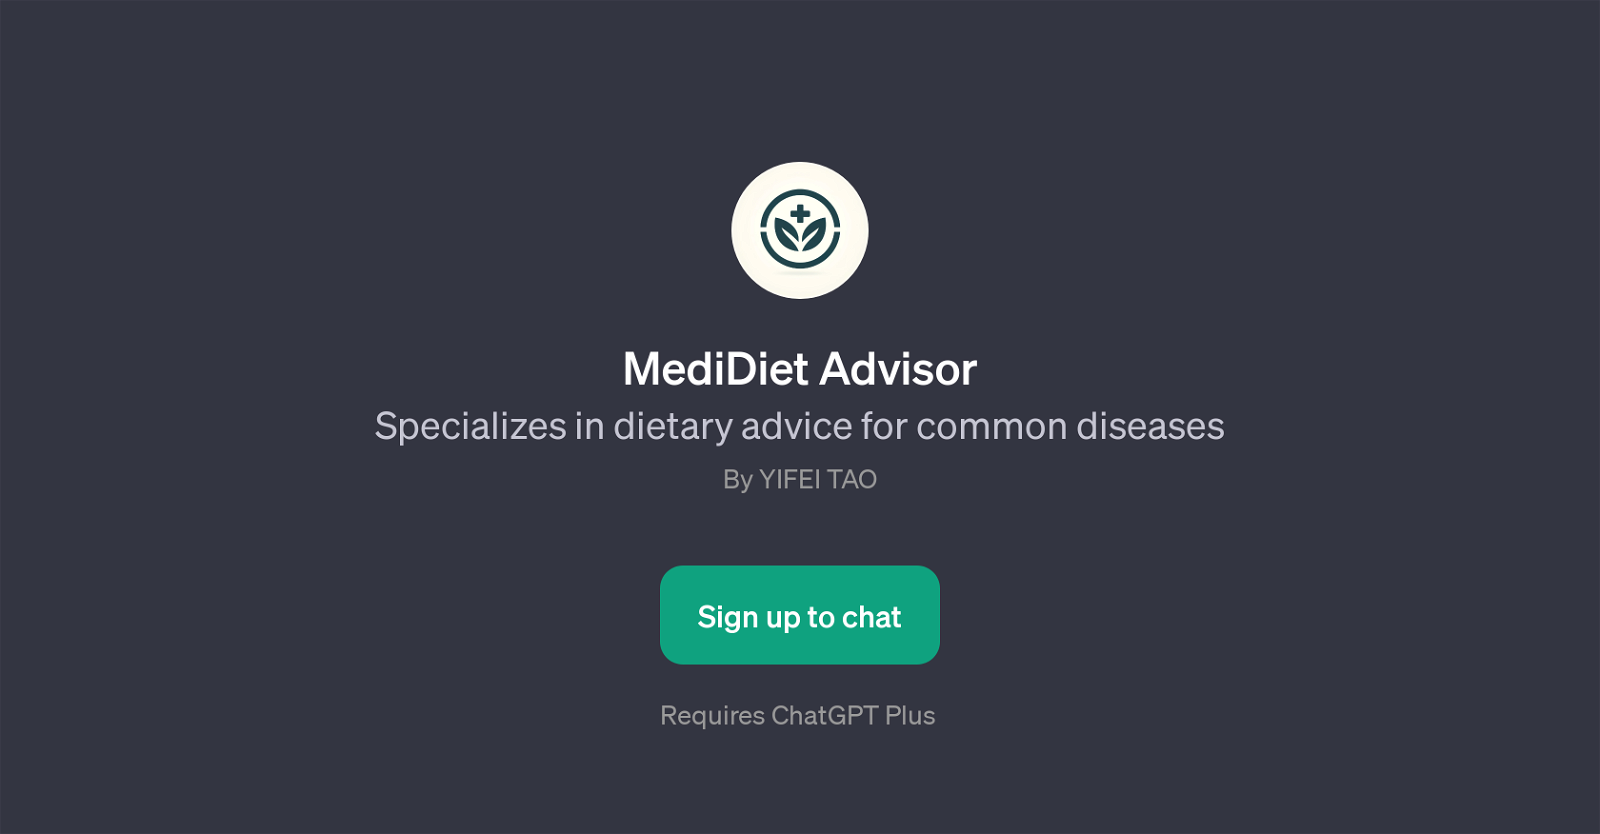 MediDiet Advisor website